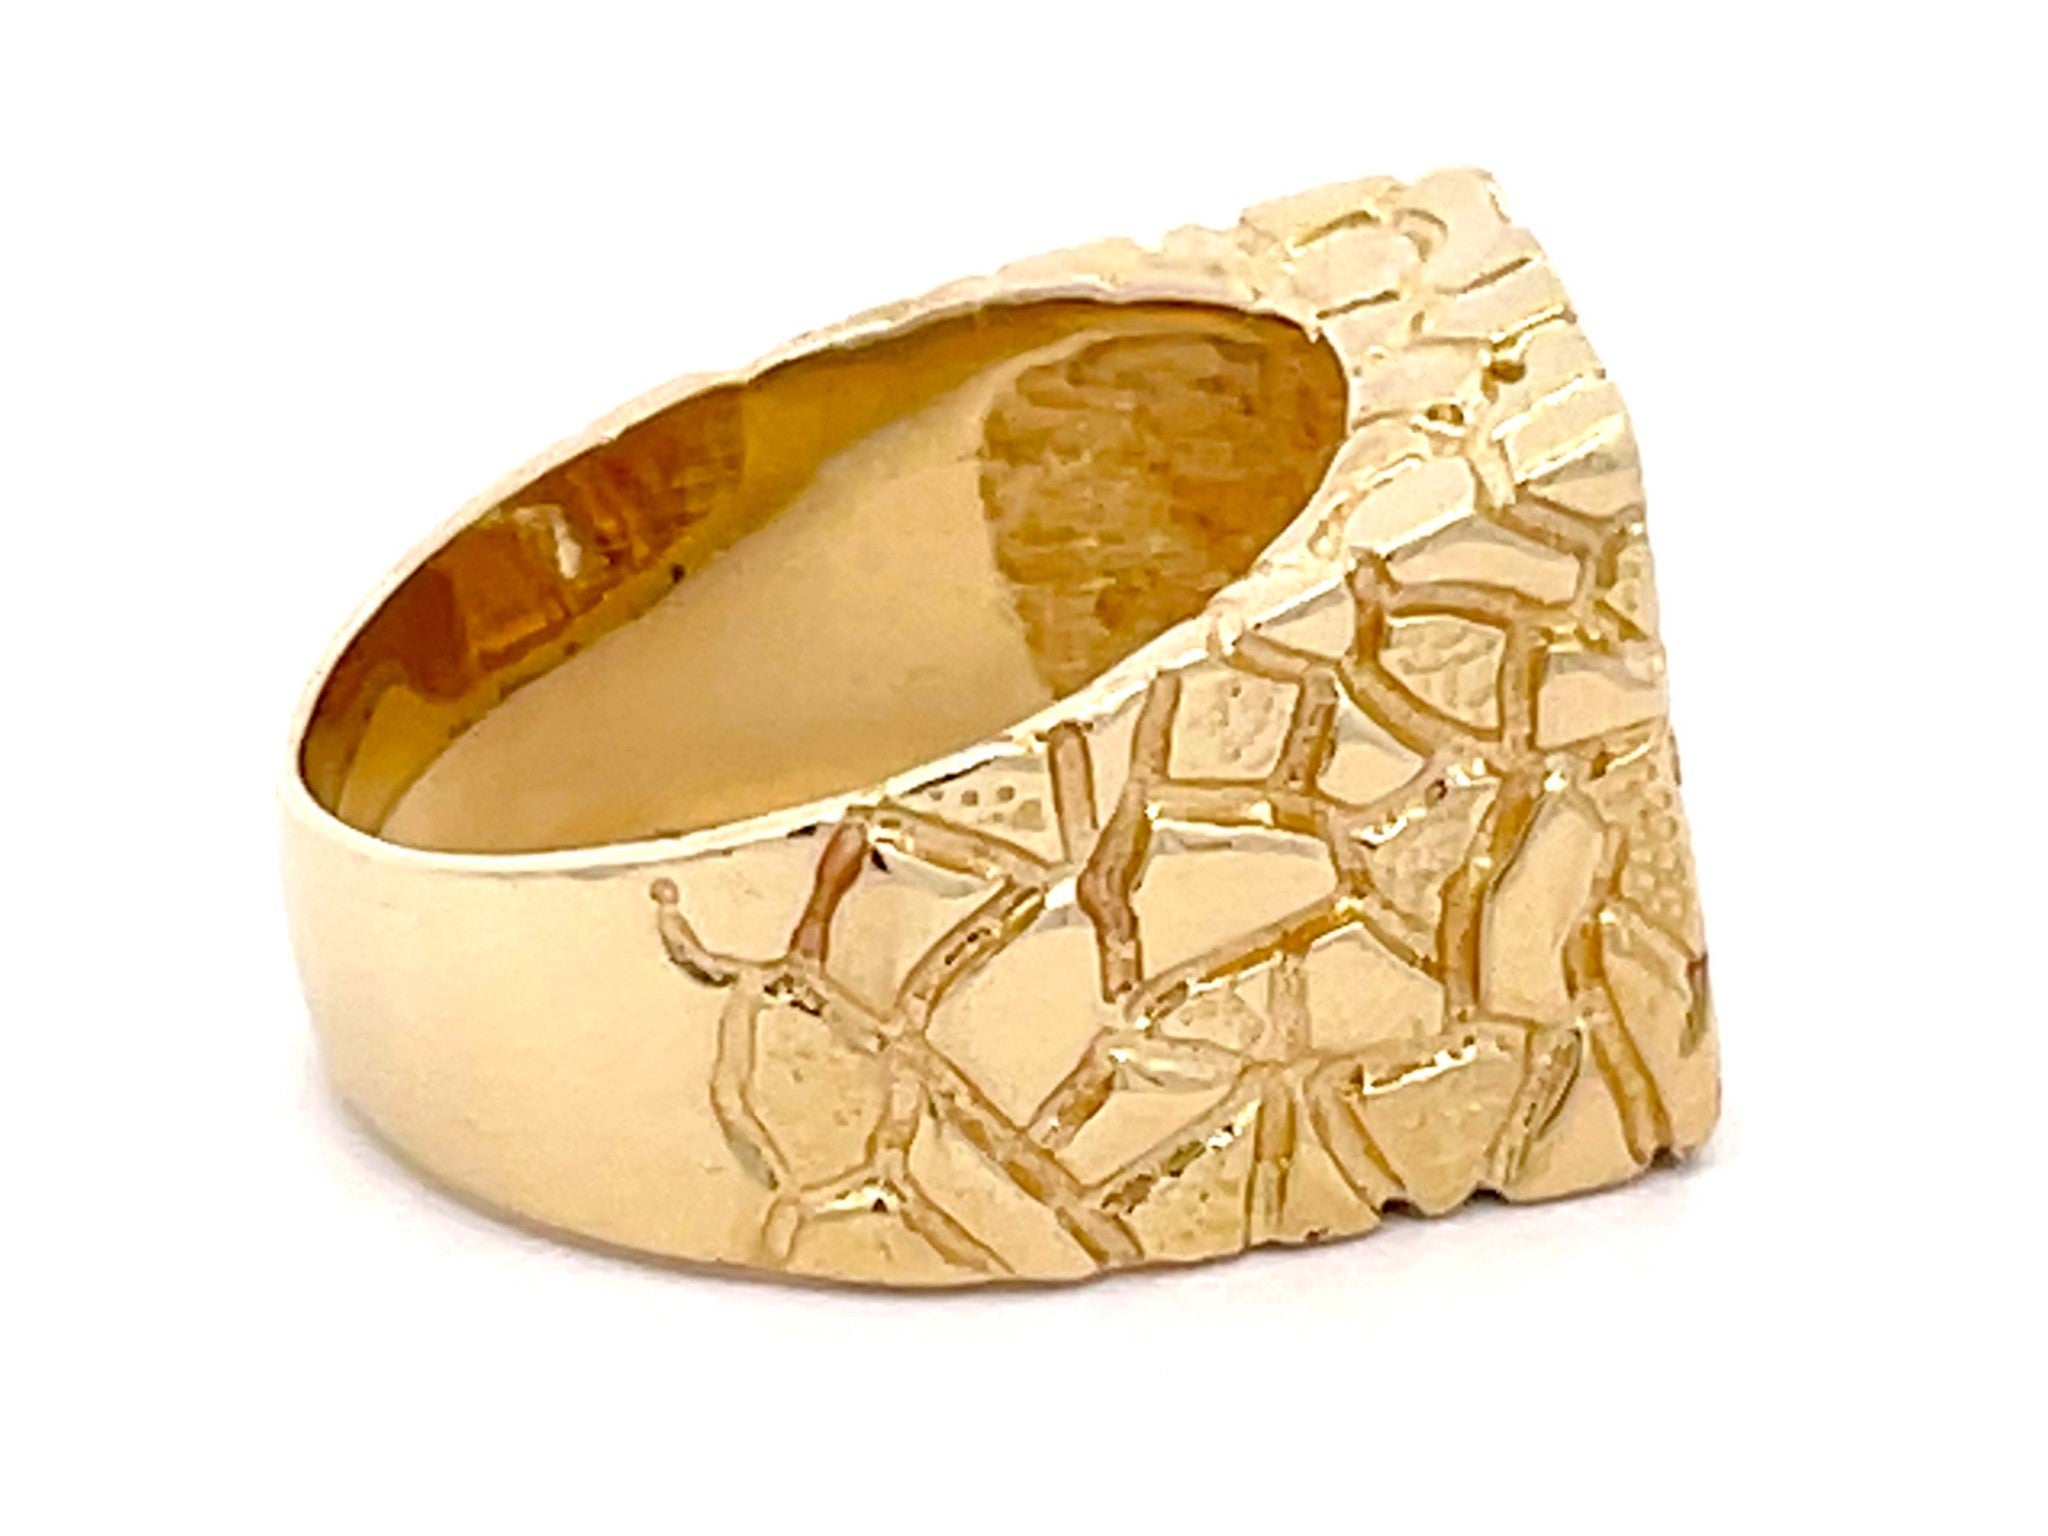 Gold Nugget Diamond Ring 14k Yellow Gold